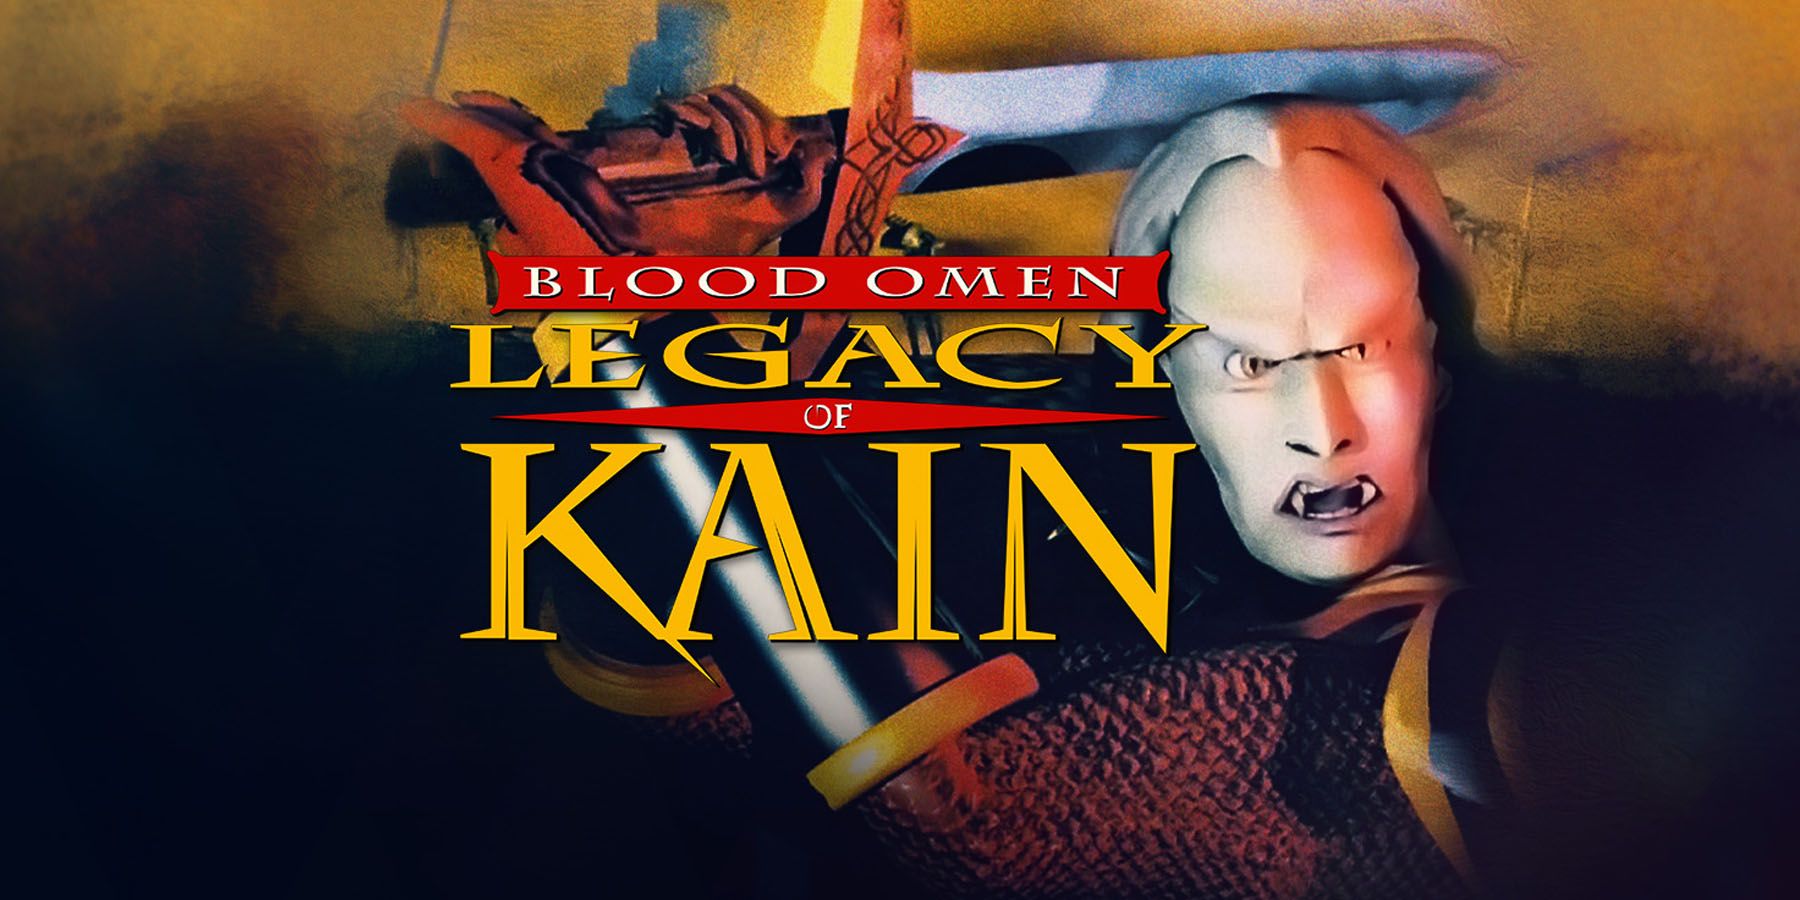 Blood Omen : Legacy of Kain sort sur PC moderne 25 ans plus tard